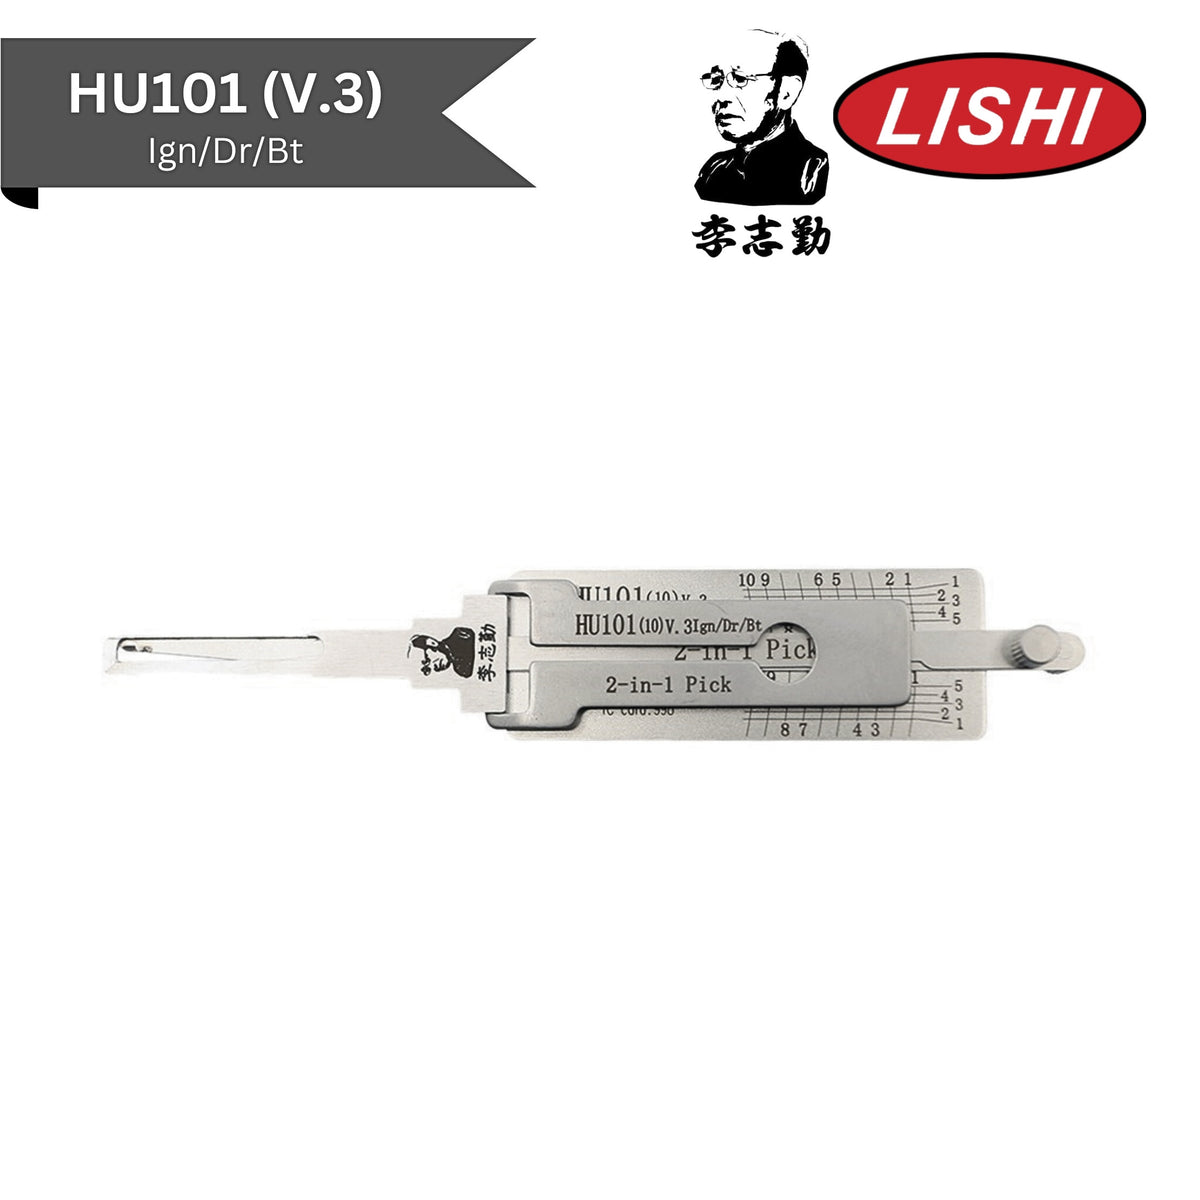 Original Lishi - Ford HU101 (V.3) 10 Cut - 2-in-1  Pick/Decoder  - AG